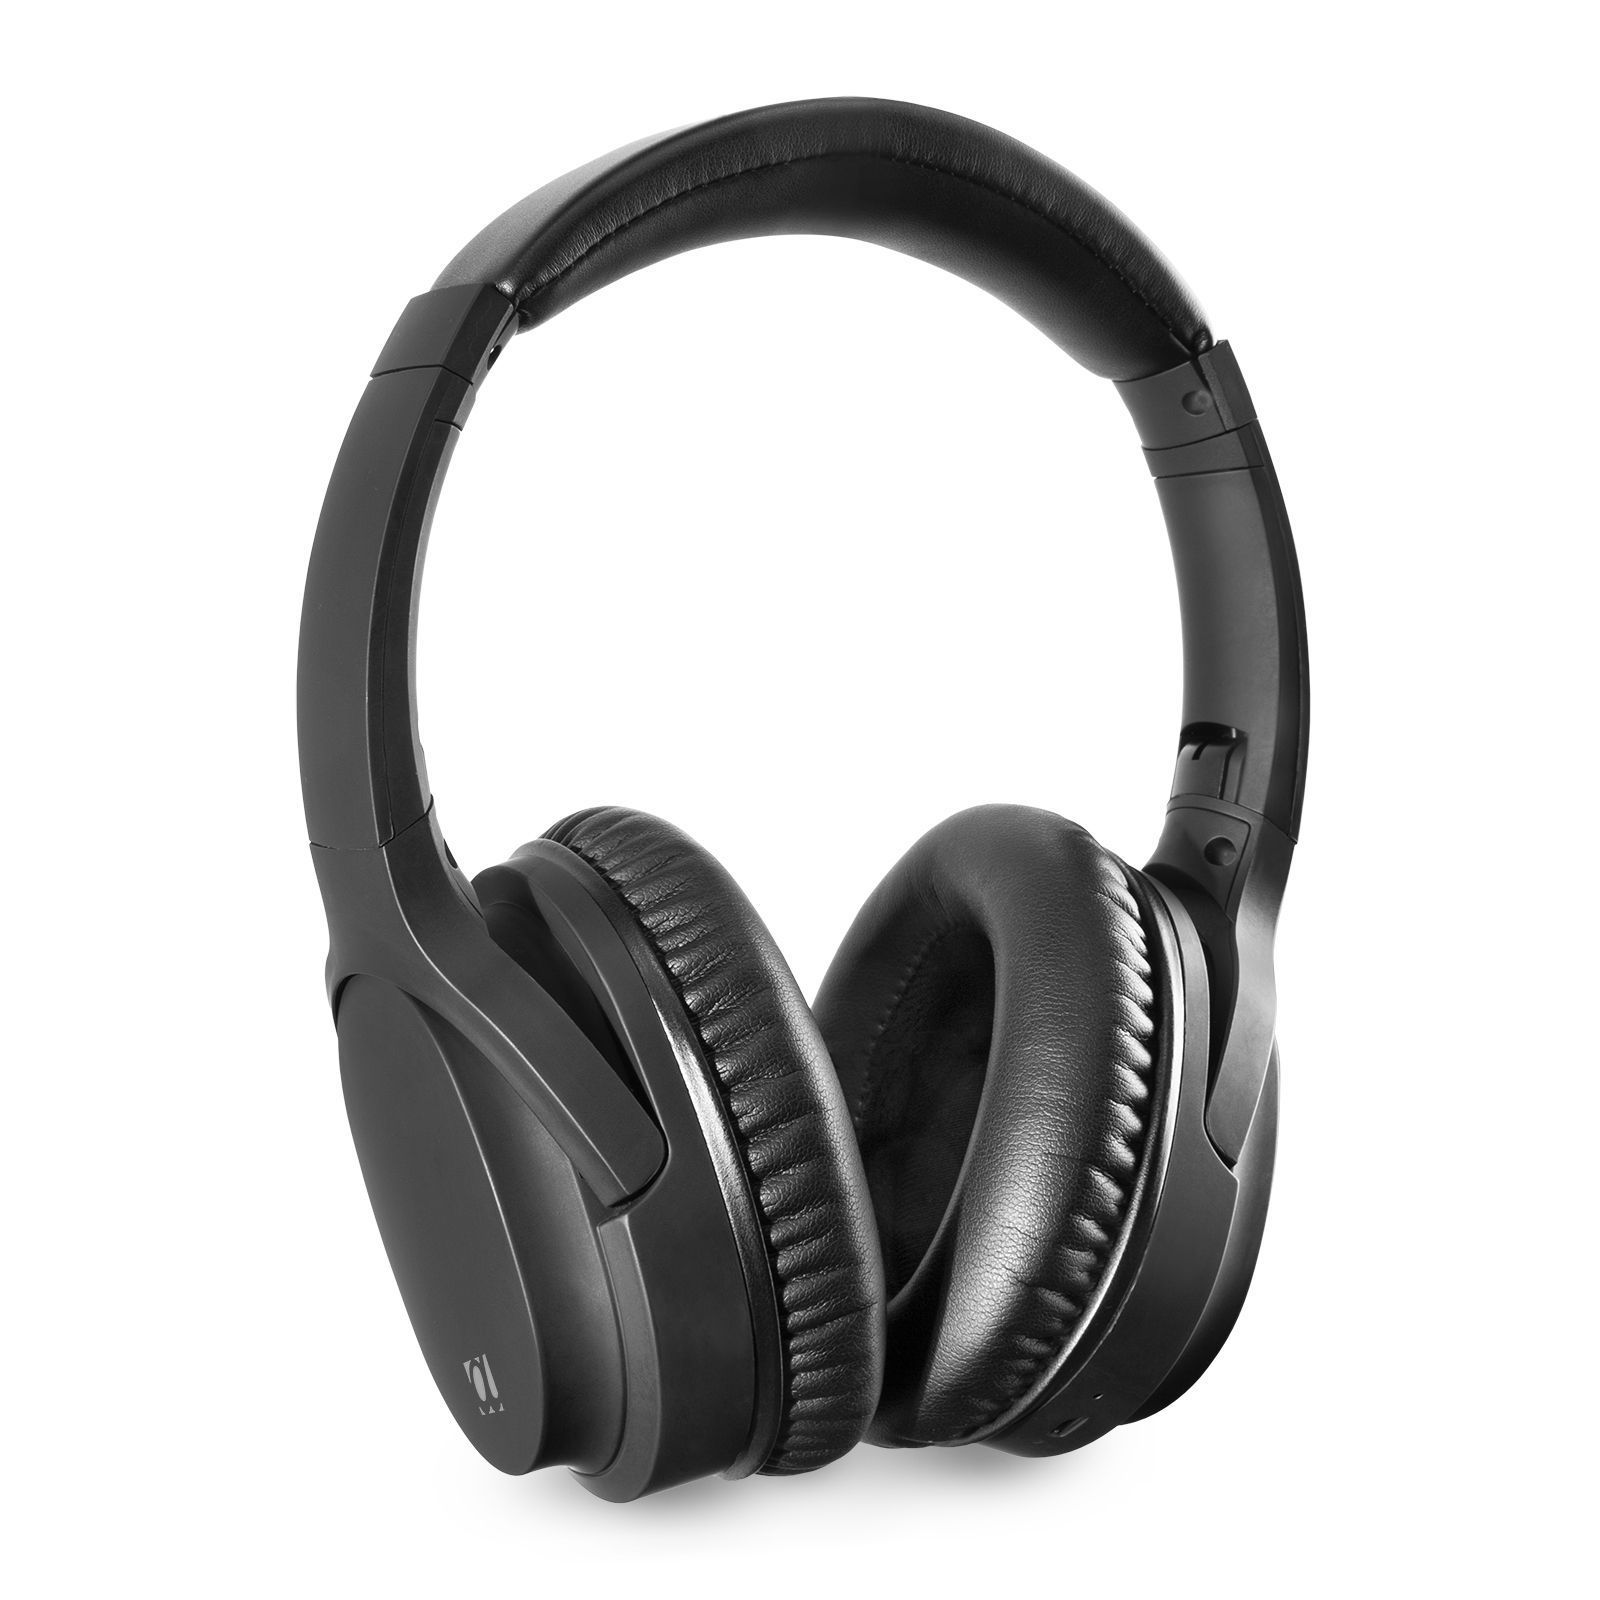 Trådlösa hörlurar - Audizio ANC110 Bluetooth-hörlurar med brusreducering - Bluetooth 5.0